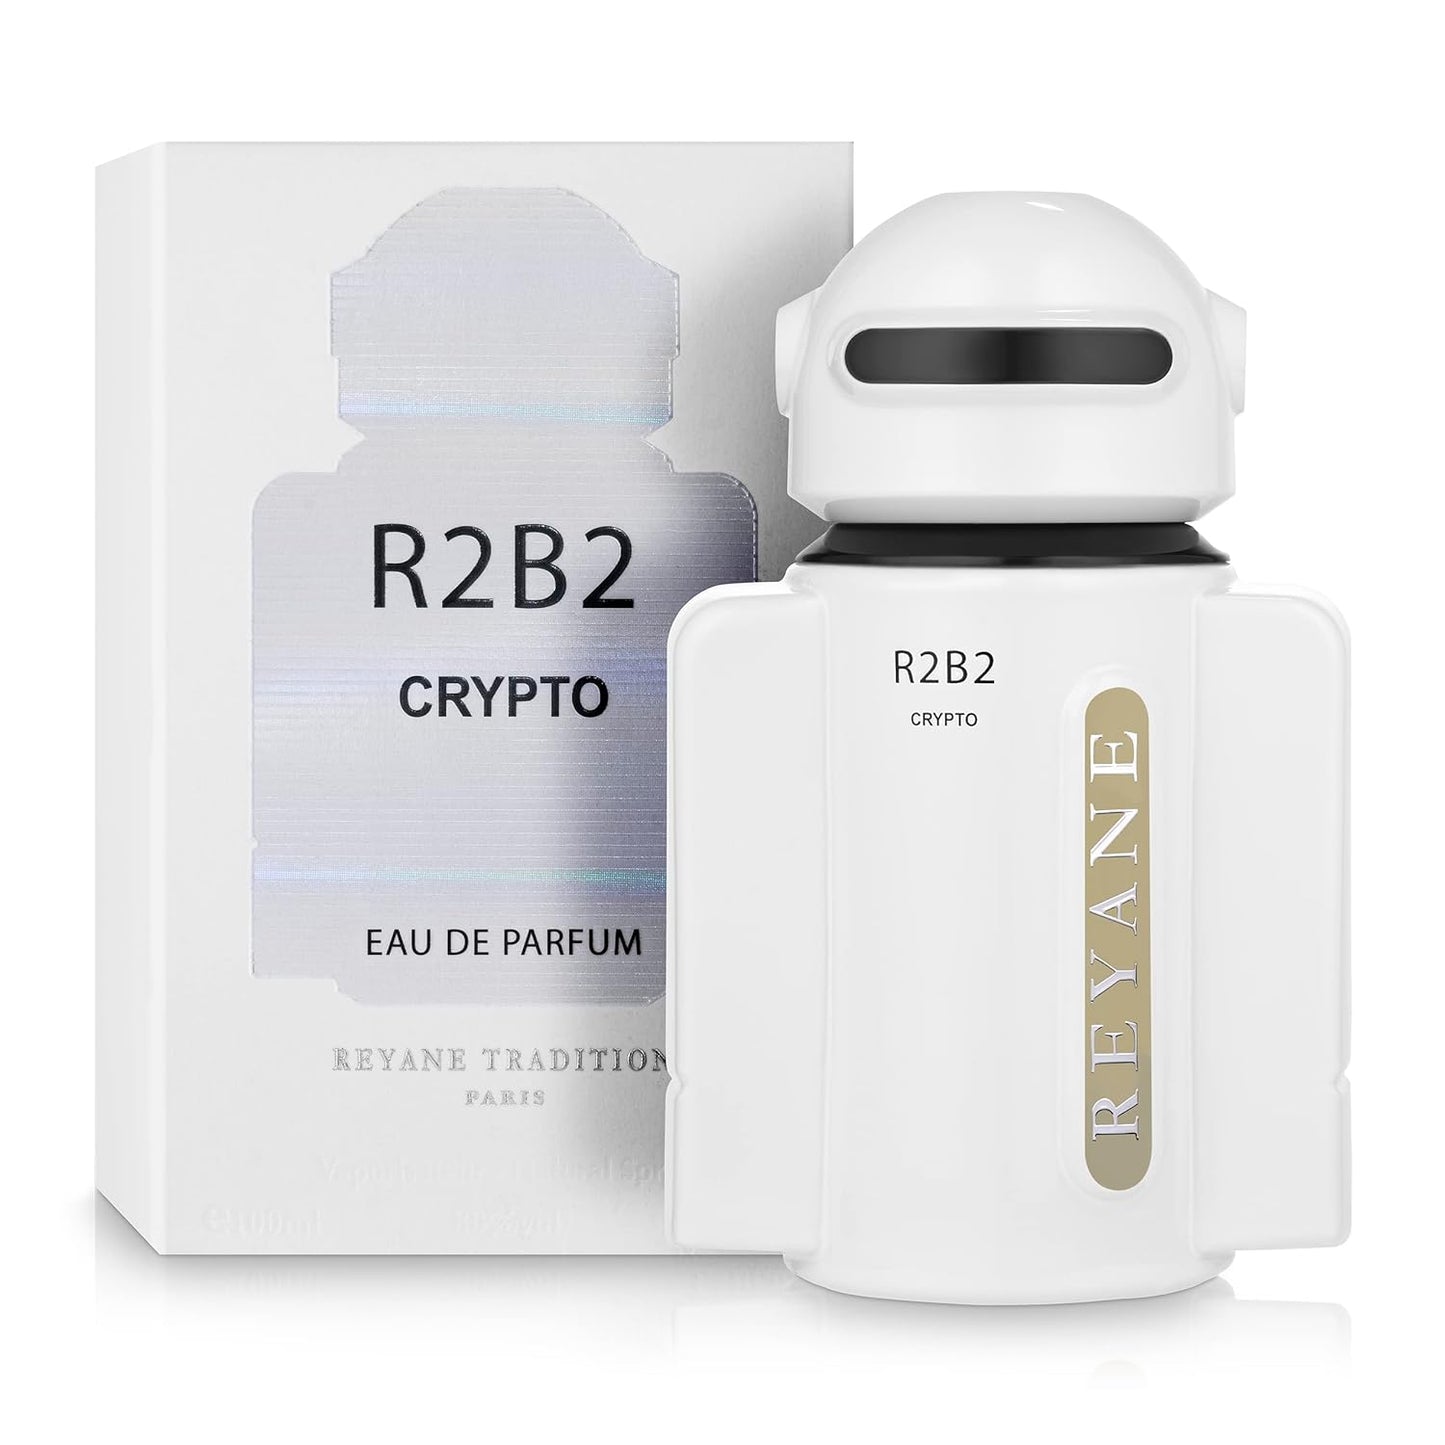 R2B2 Crypto By Reyane Tradition